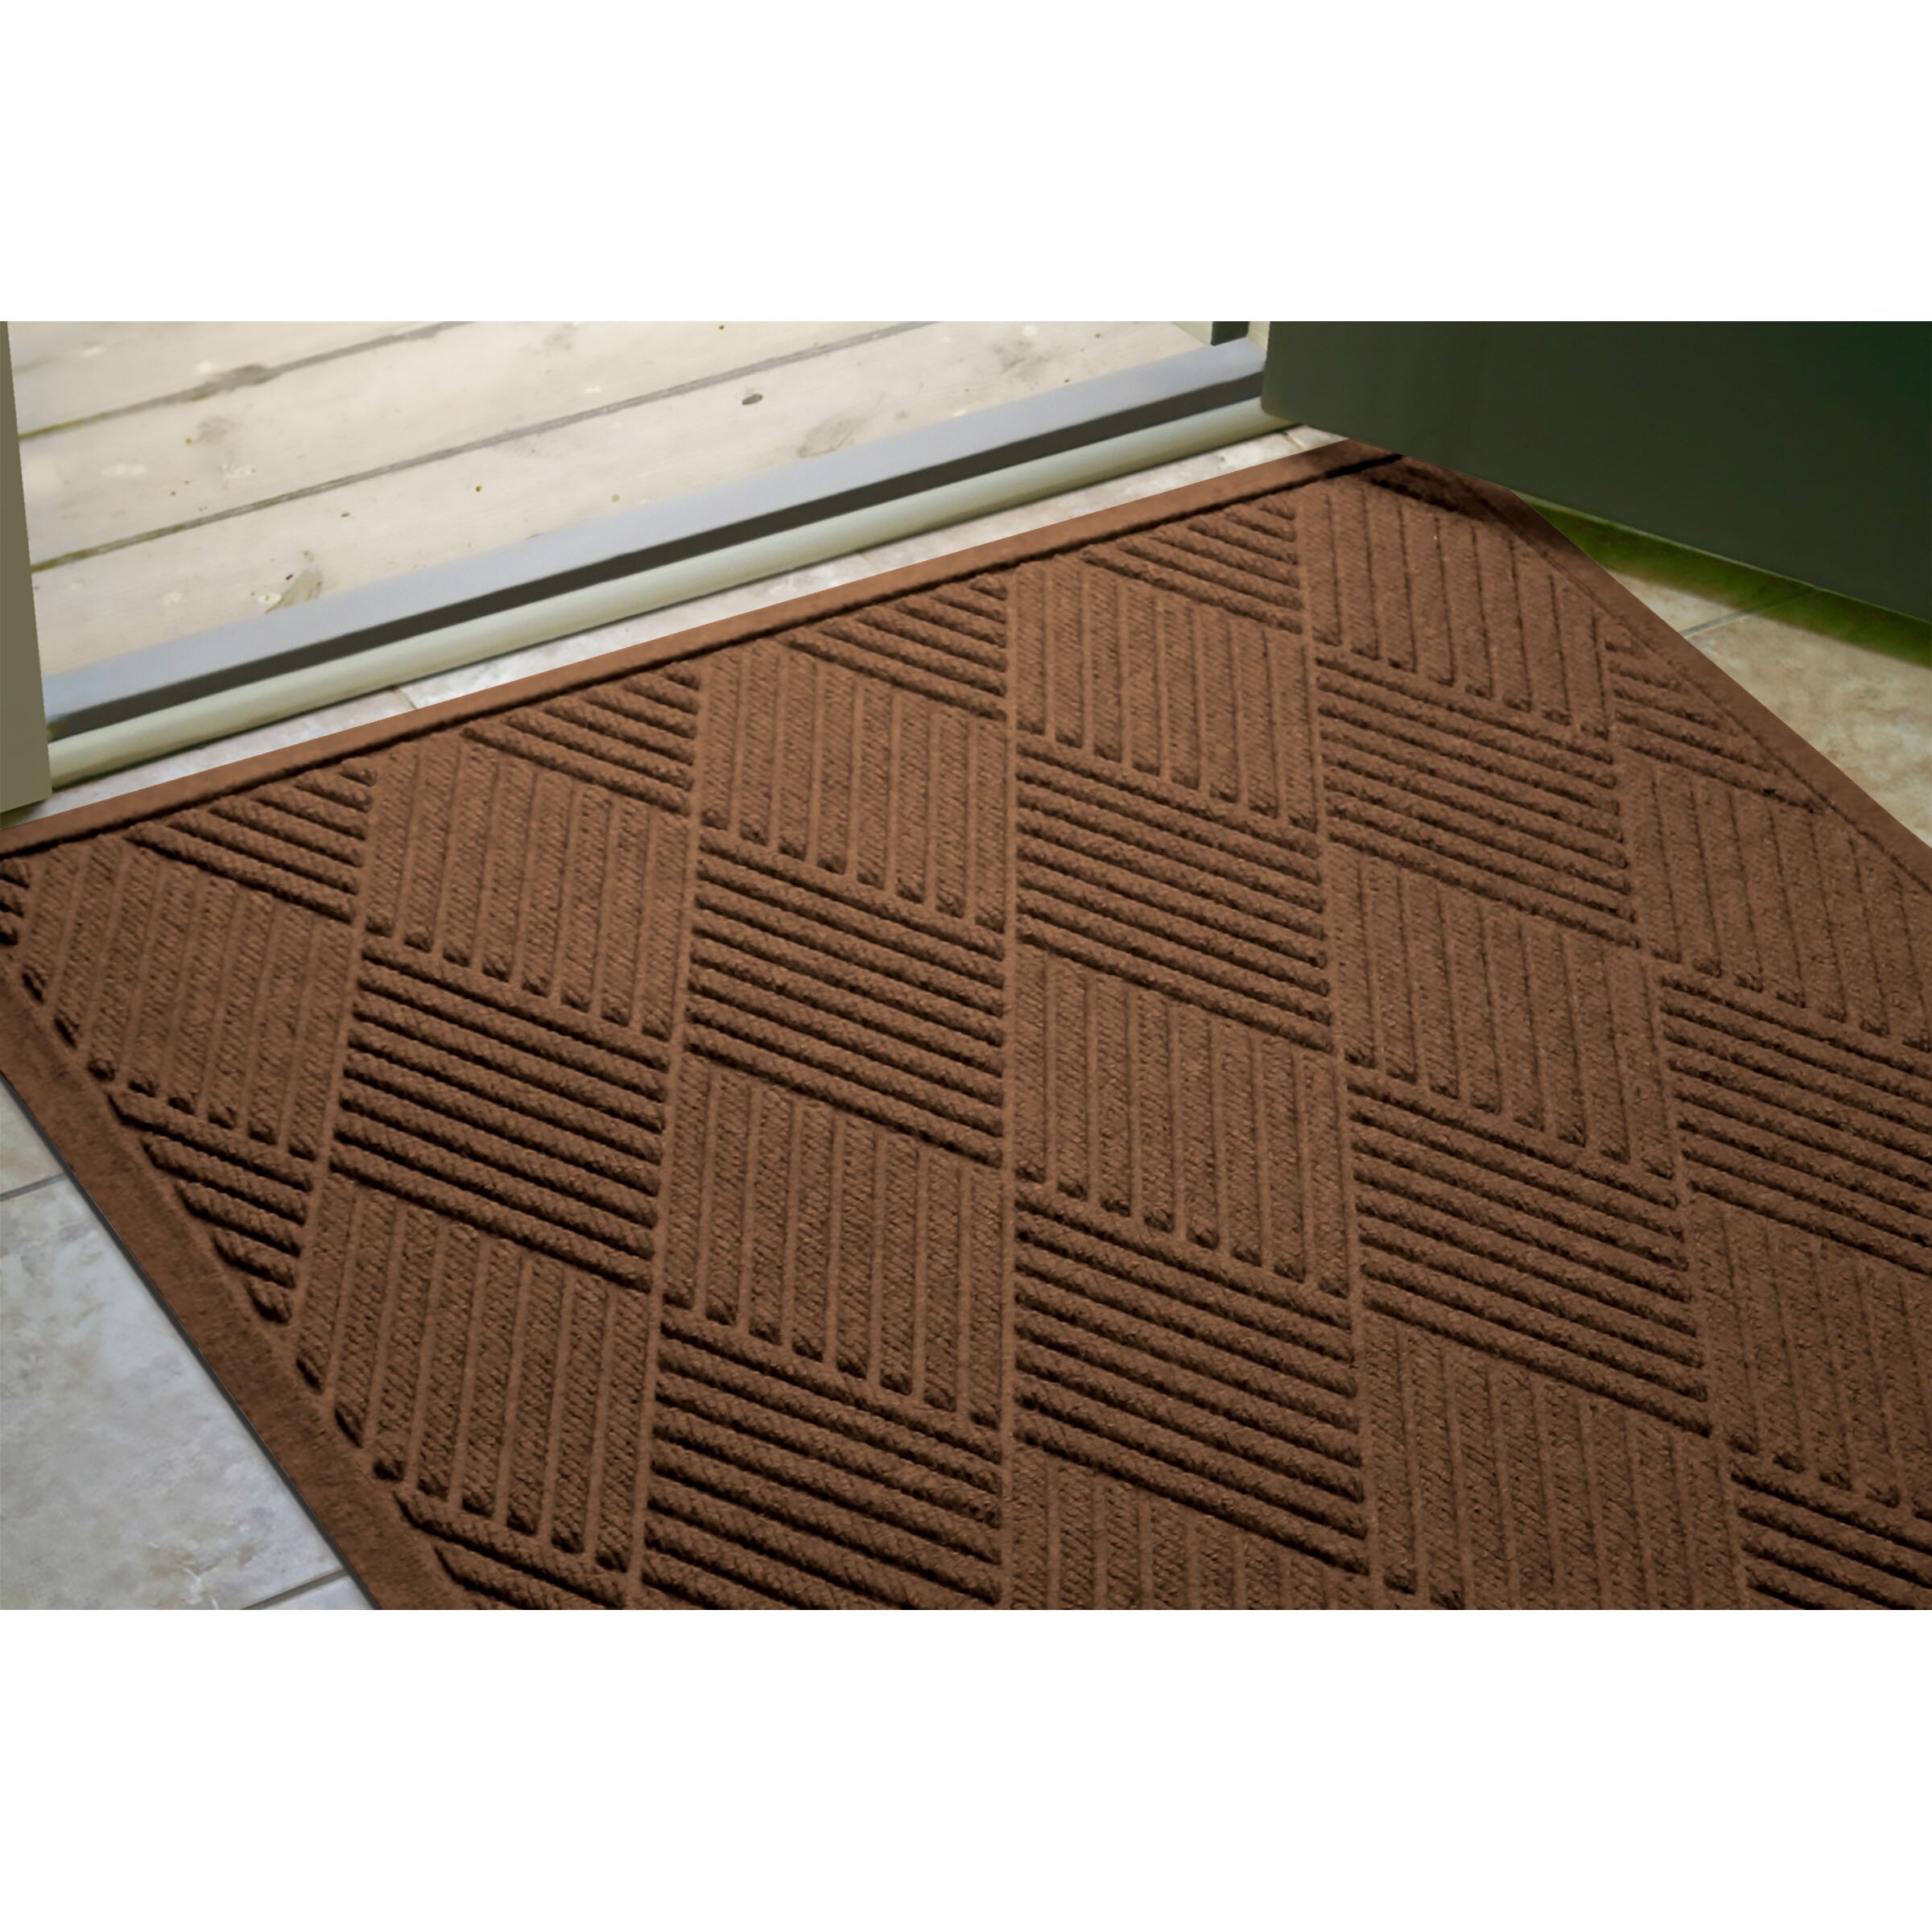 Waterhog Fern Doormat, 2' x 3' - Camel